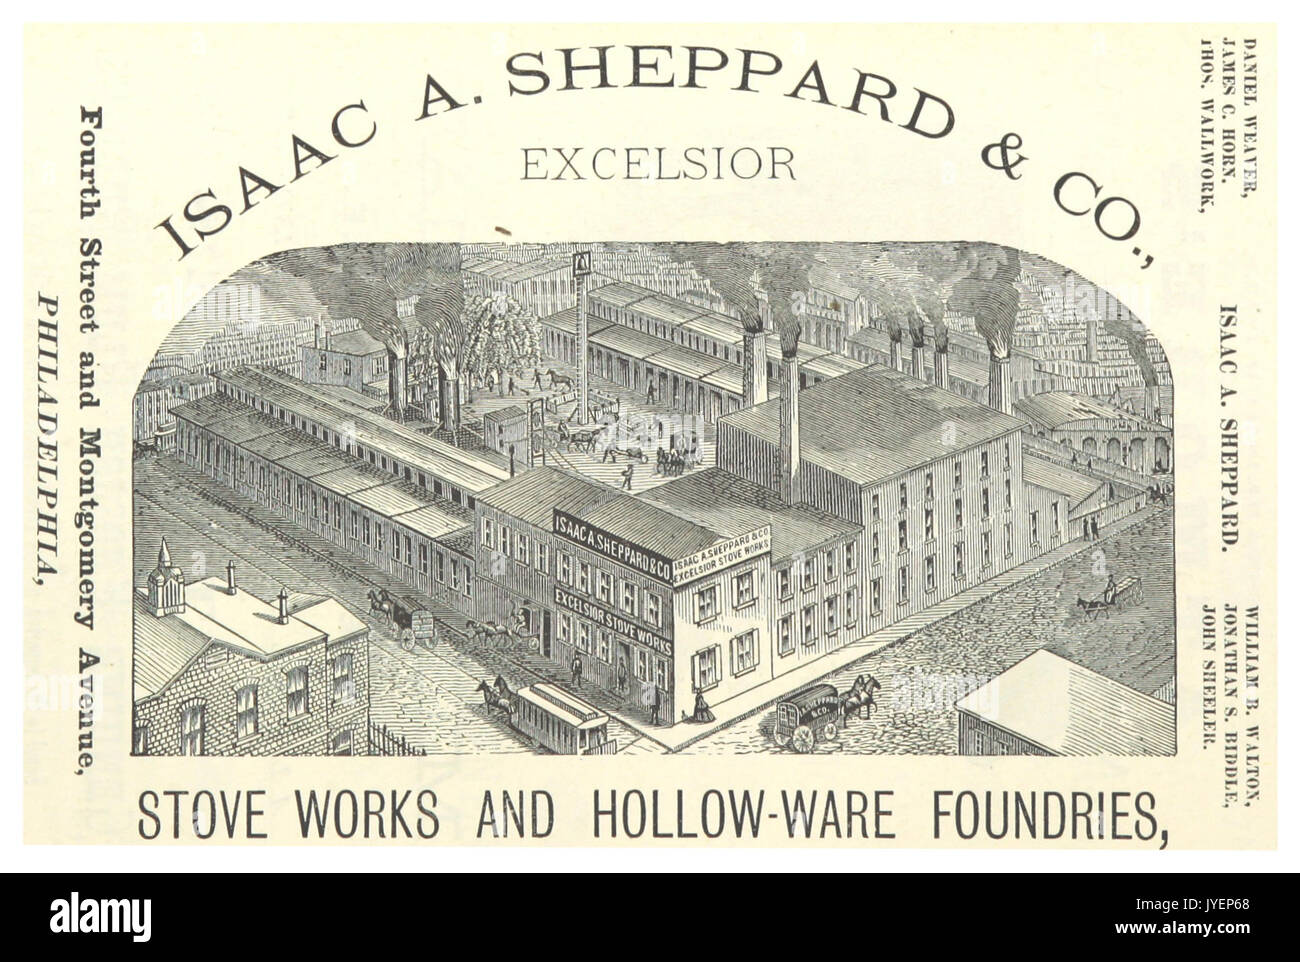 (1876Exhib) p694   Philadelphia, SHEPPARD & CO Stock Photo